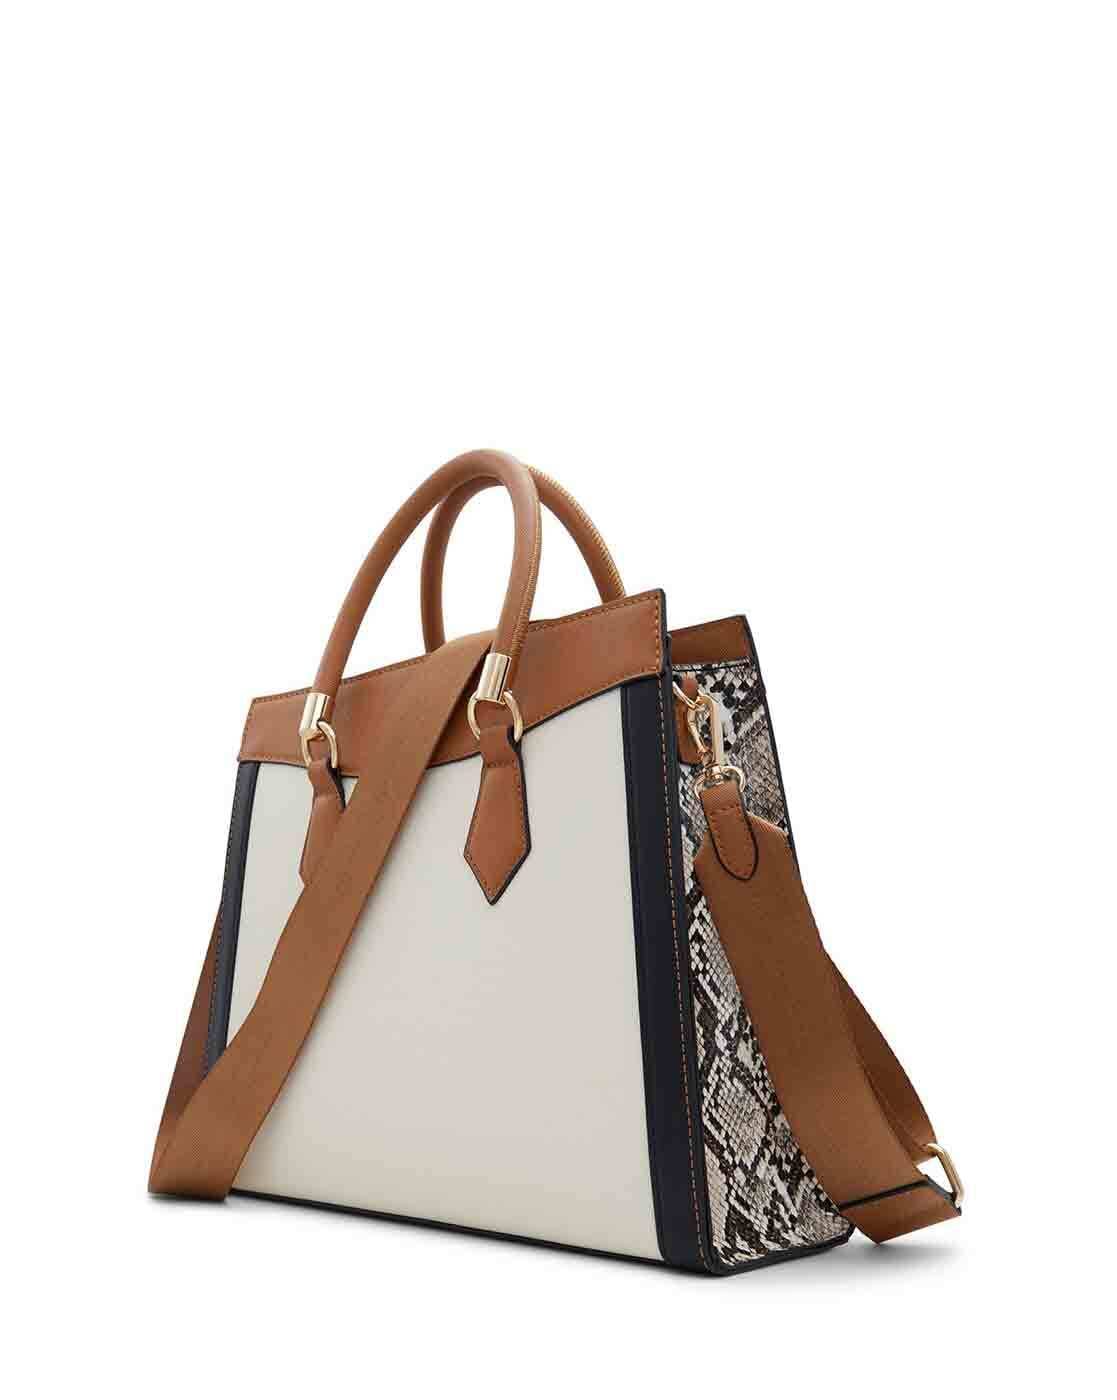 FRATTAPOLESINE - sale's sale handheld bags handbags for sale at ALDO Shoes.  | Bags, Aldo bags, Aldo handbags